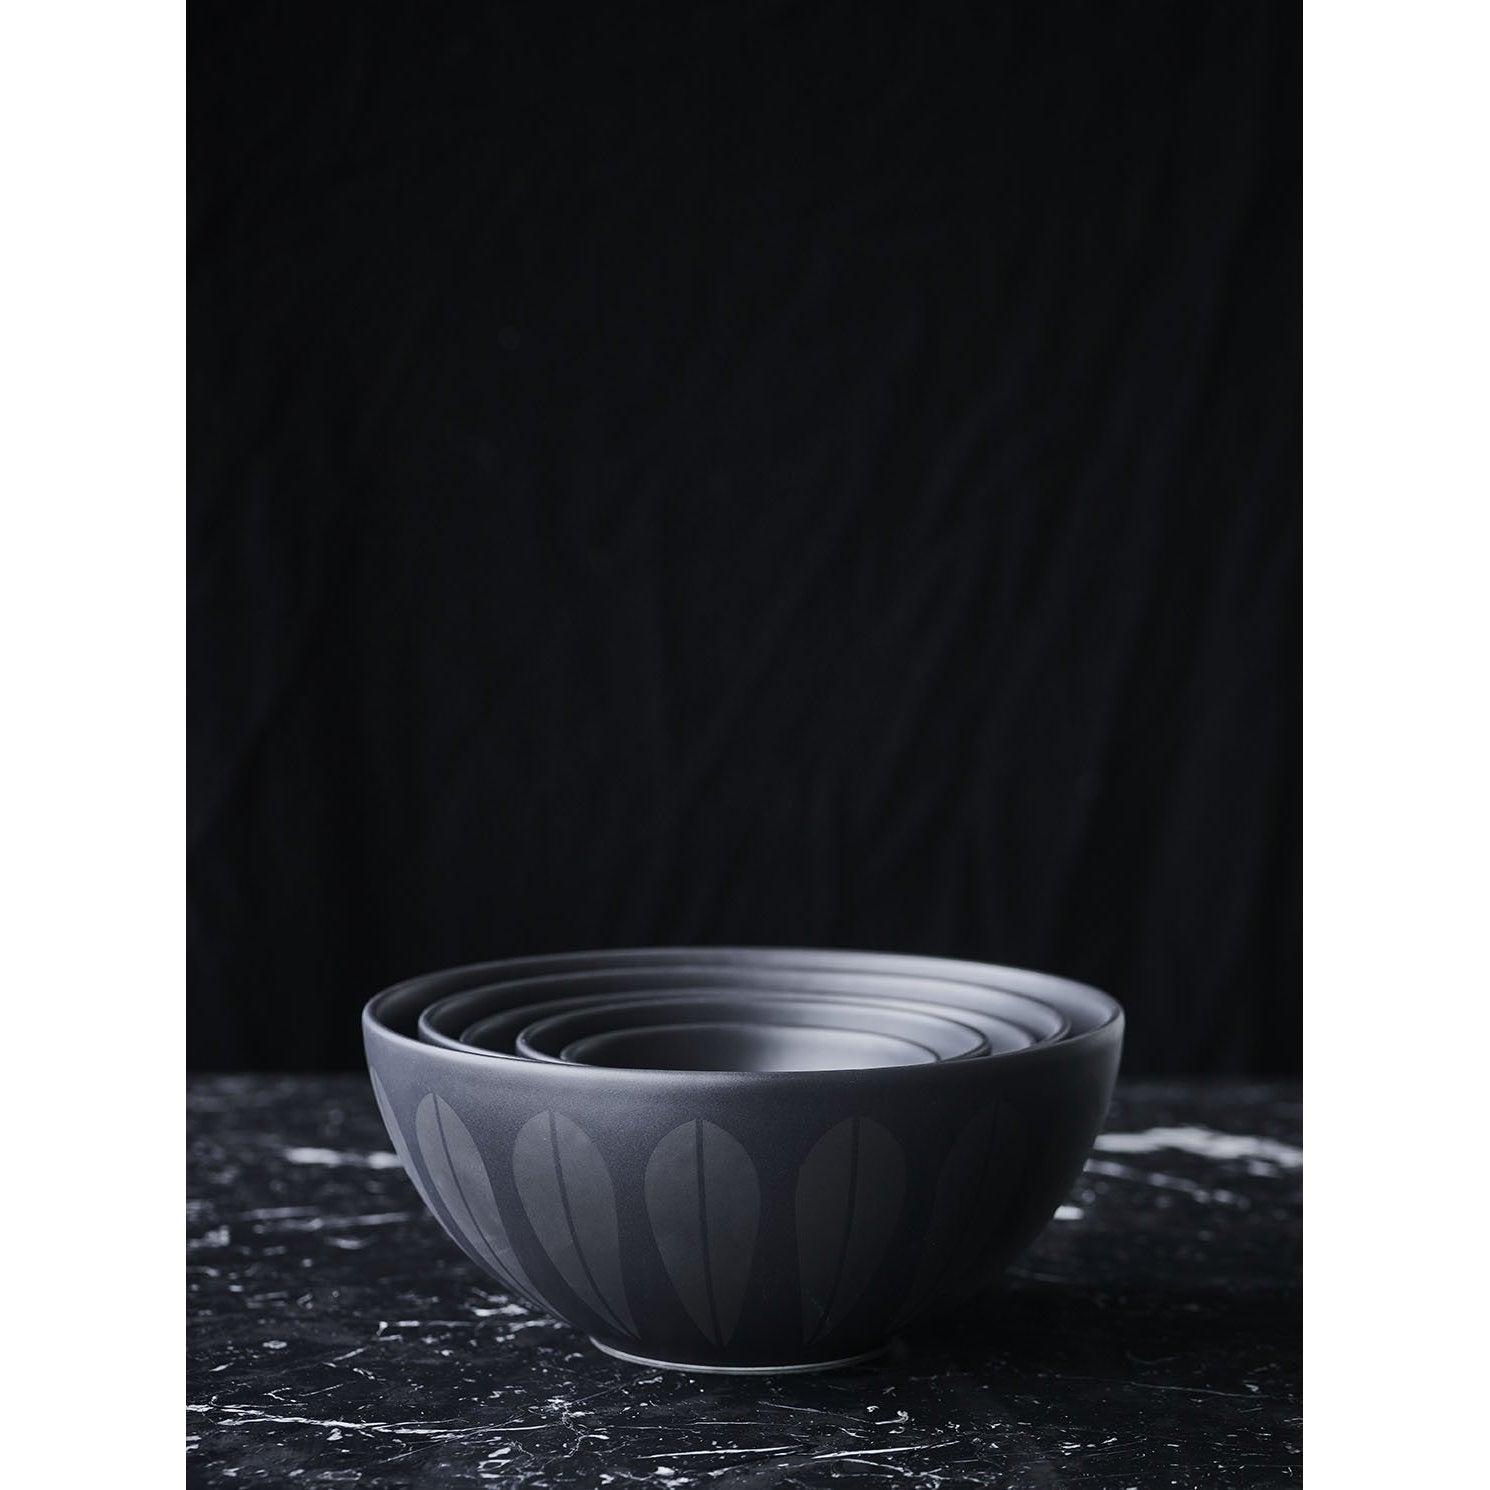 Lucie Kaas Arne Clausen Bowl černá, 24 cm